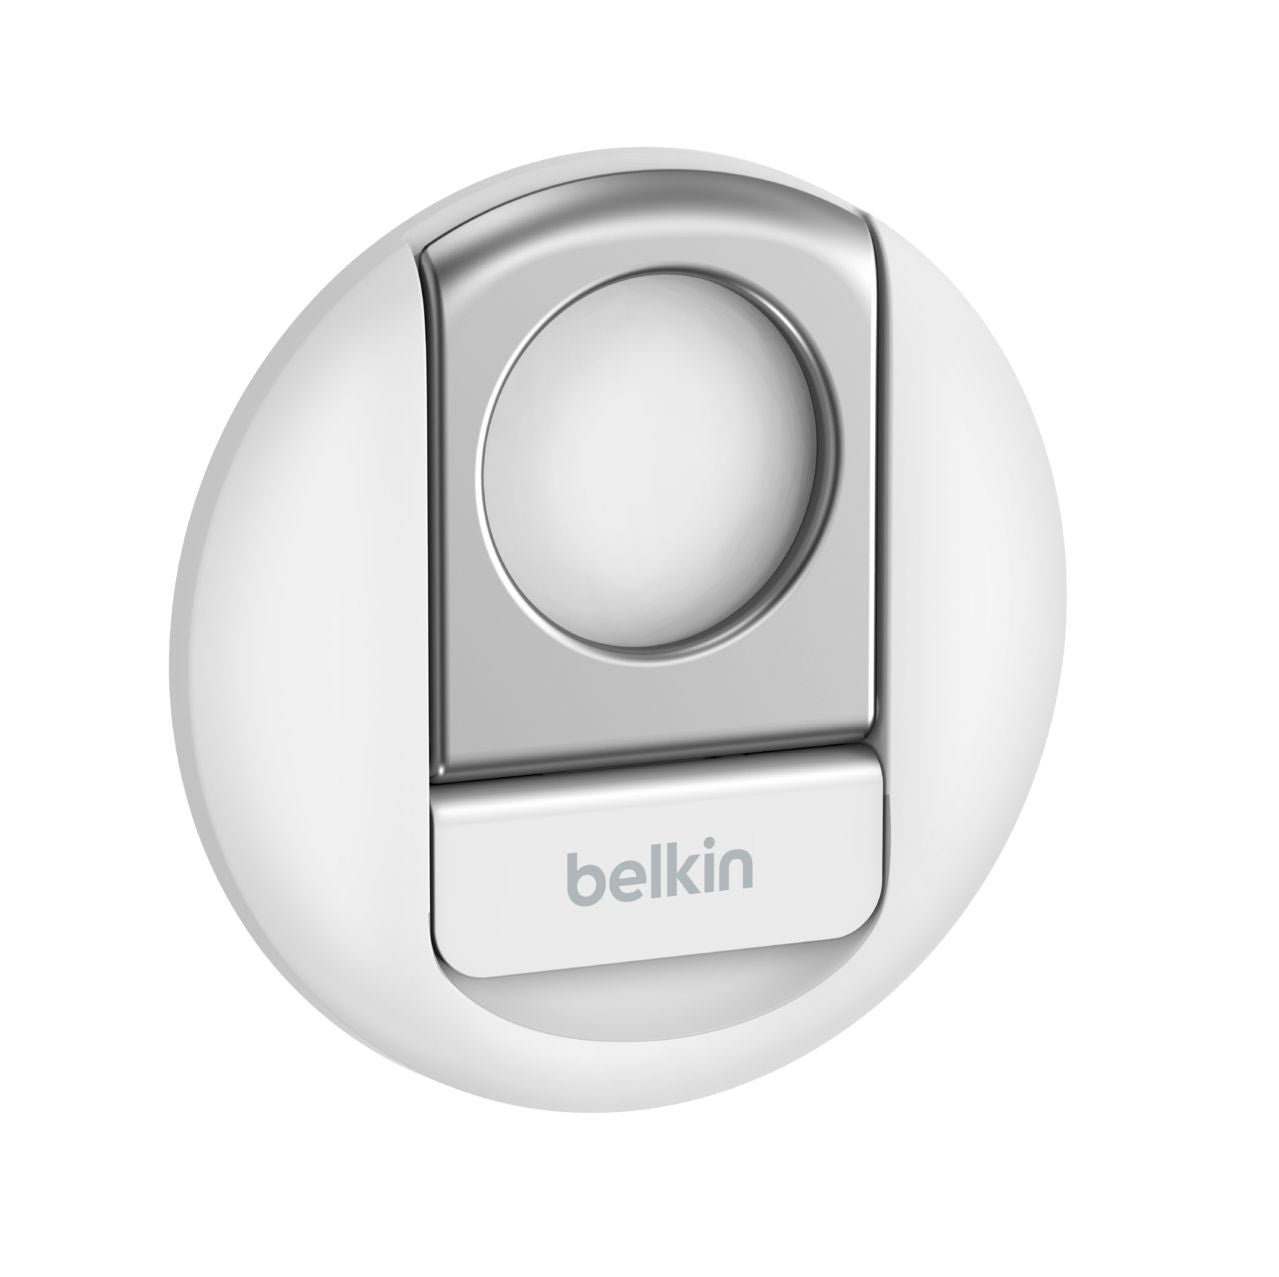 Belkin MMA006btWH Support actif Mobile/smartphone Blanc